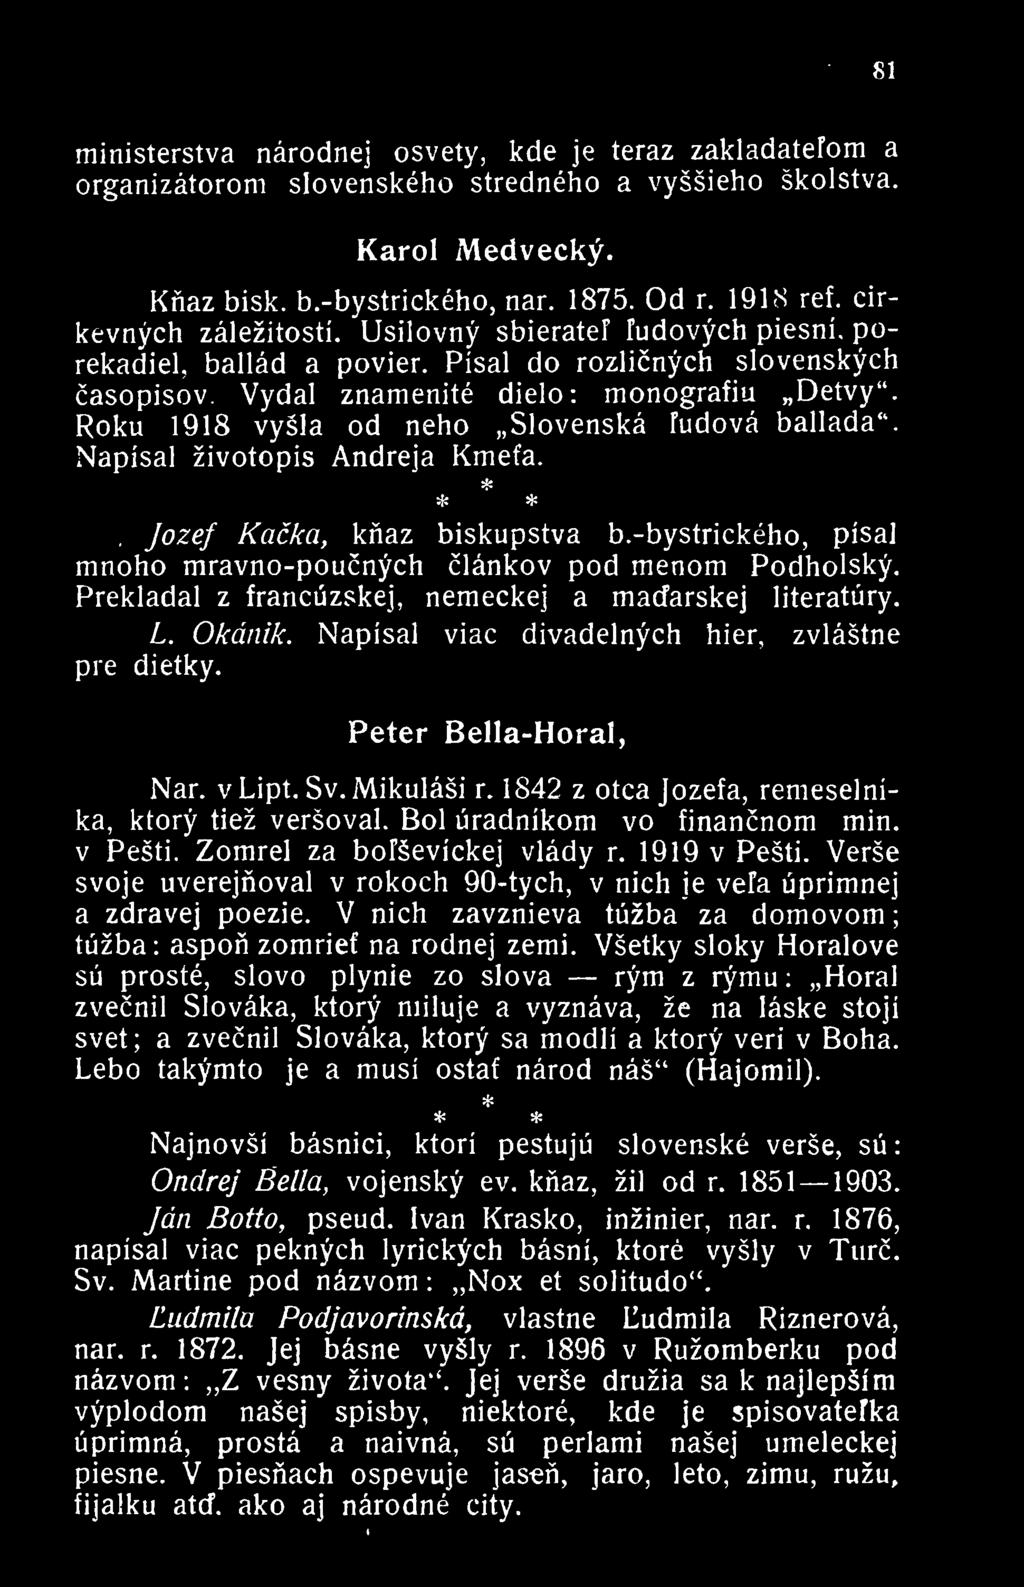 Roku 1918 vysla od neho Slovenska Fudova ballada". Napisal zivotopis Andreja Kmefa. * * Jozef Kacka, knaz biskupstva b.-bystrickeho, pisal mnoho mravno-poucnych clankov pod menom Podholsky.